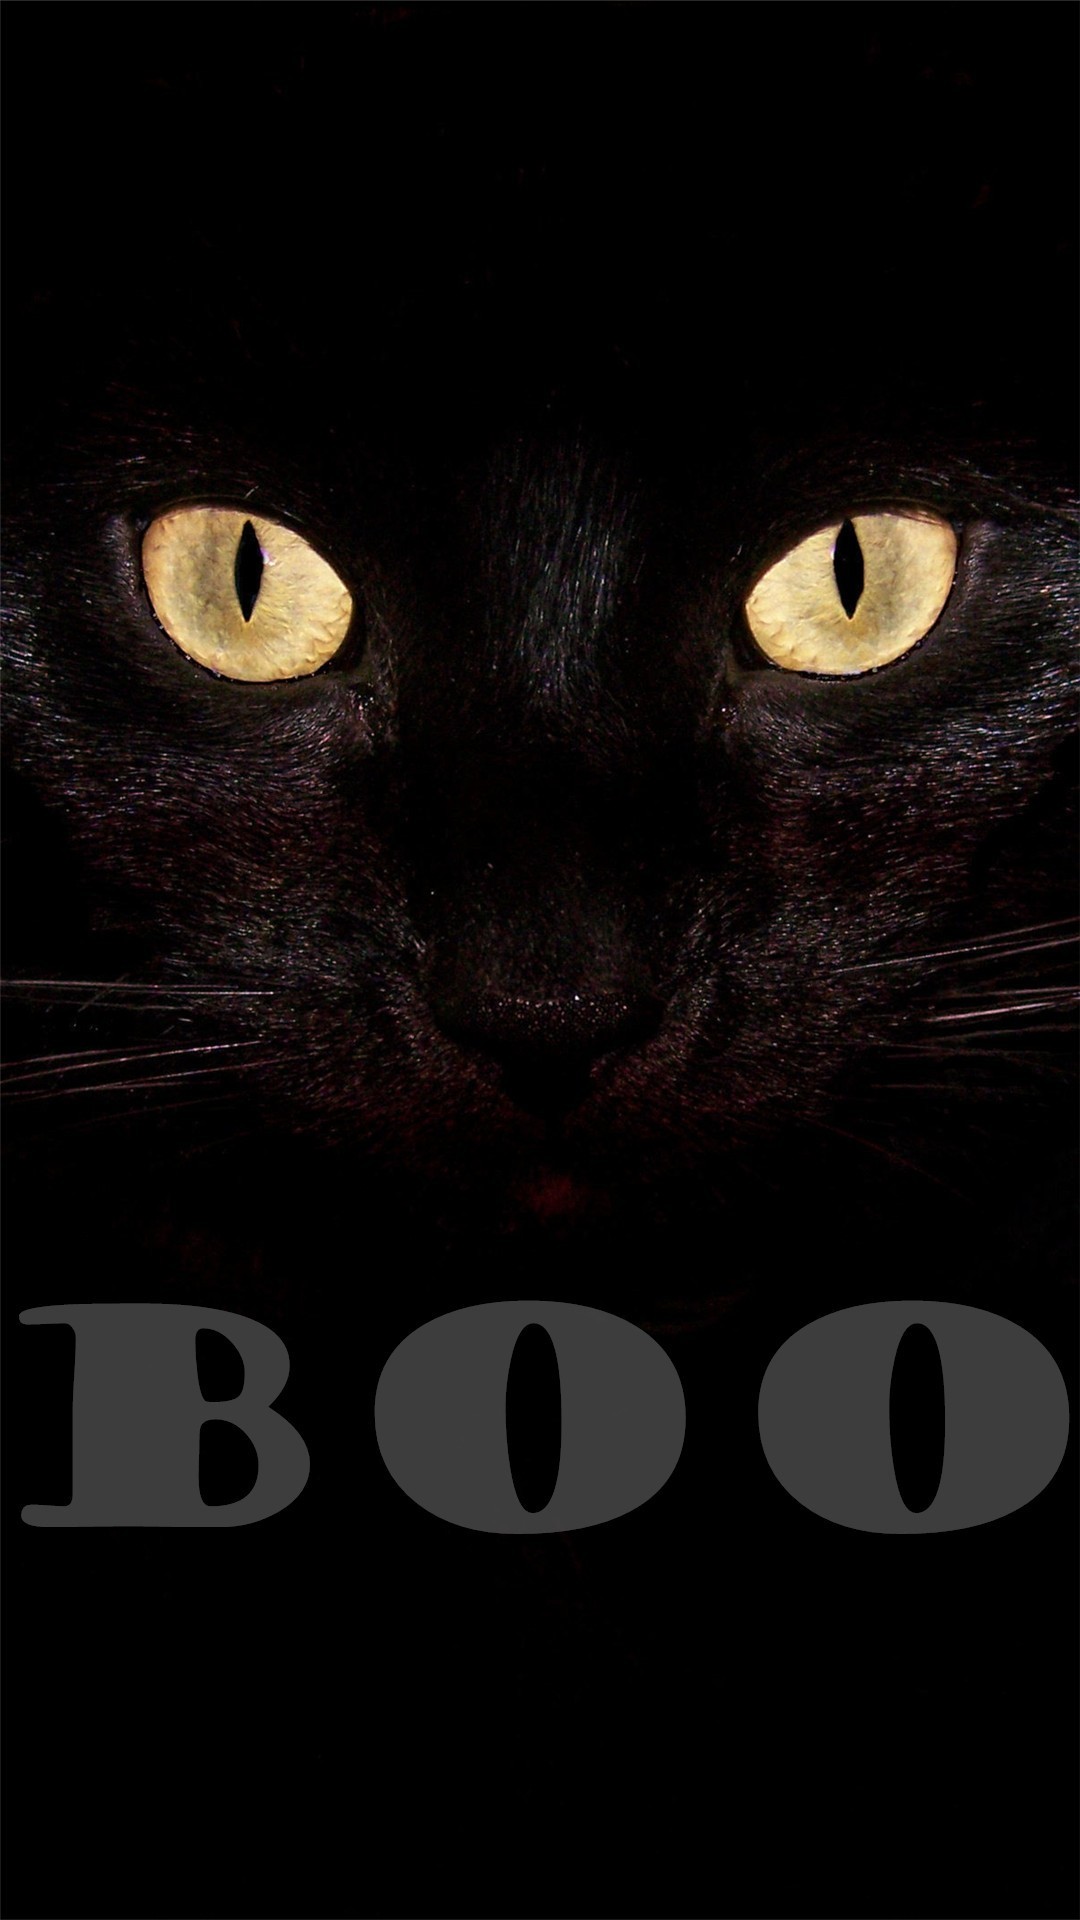 1080x1920 Black cat Boo Halloween iPhone 6 plus wallpapers 2014 #iphone #wallpaper